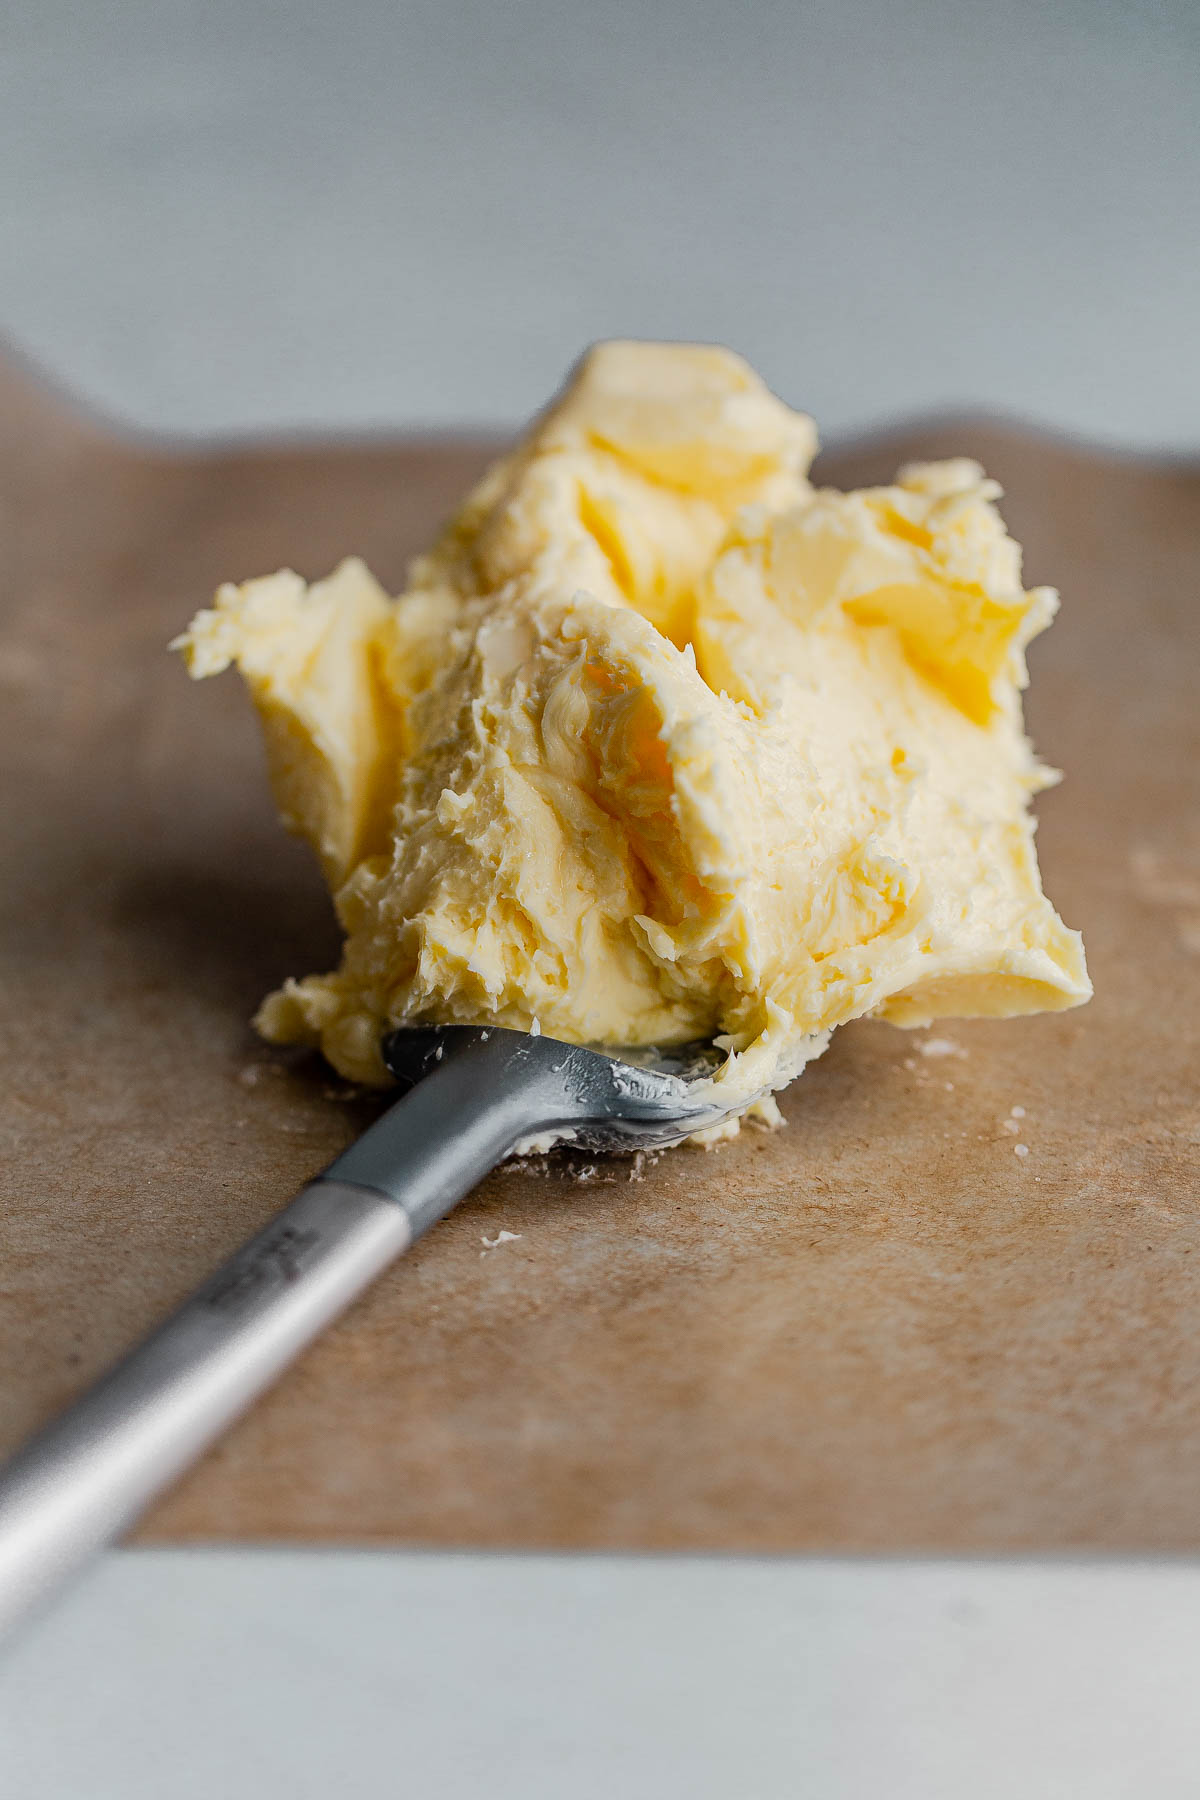 https://www.abeautifulplate.com/wp-content/uploads/2019/10/how-to-make-cultured-butter-1-25.jpg